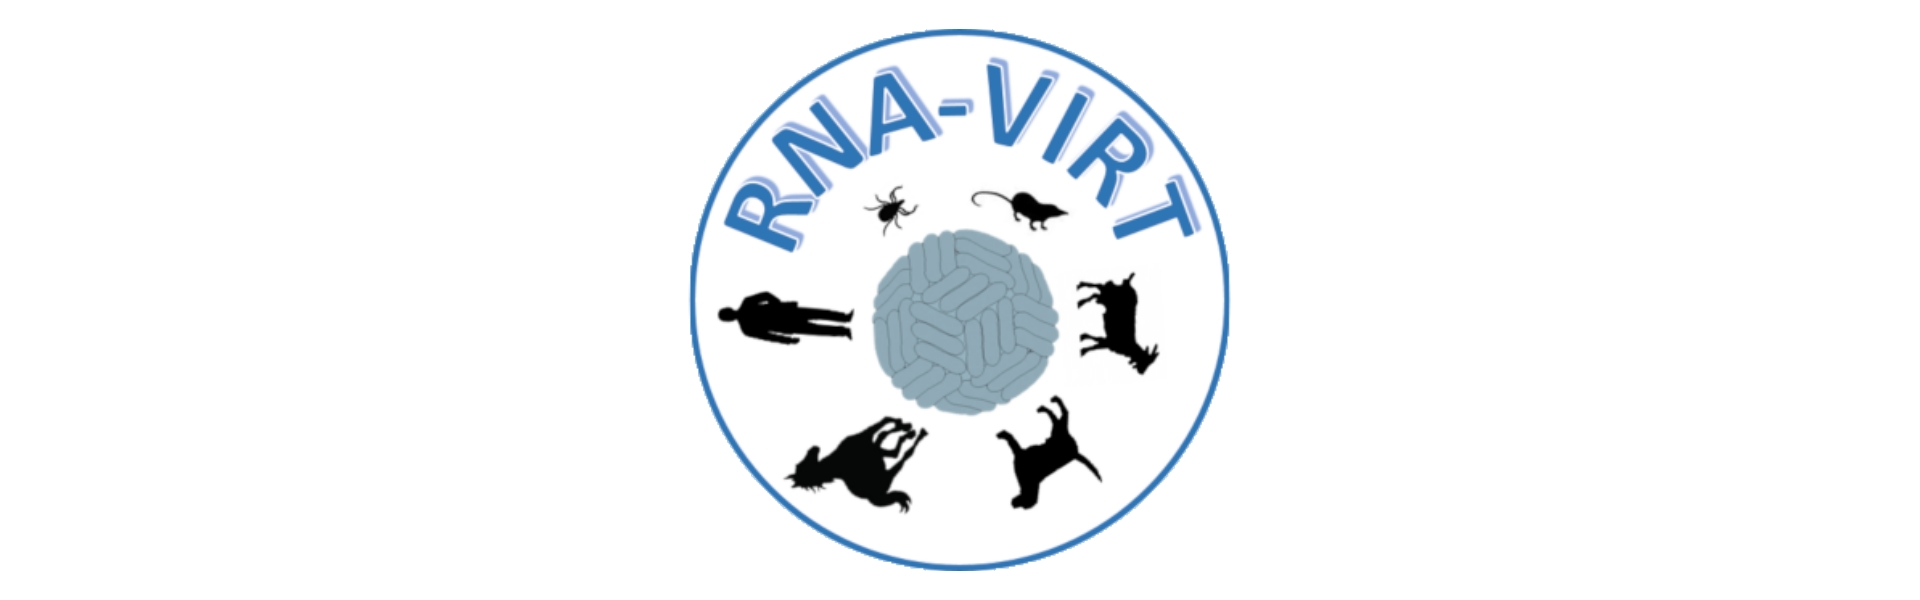 RNA-VIRT